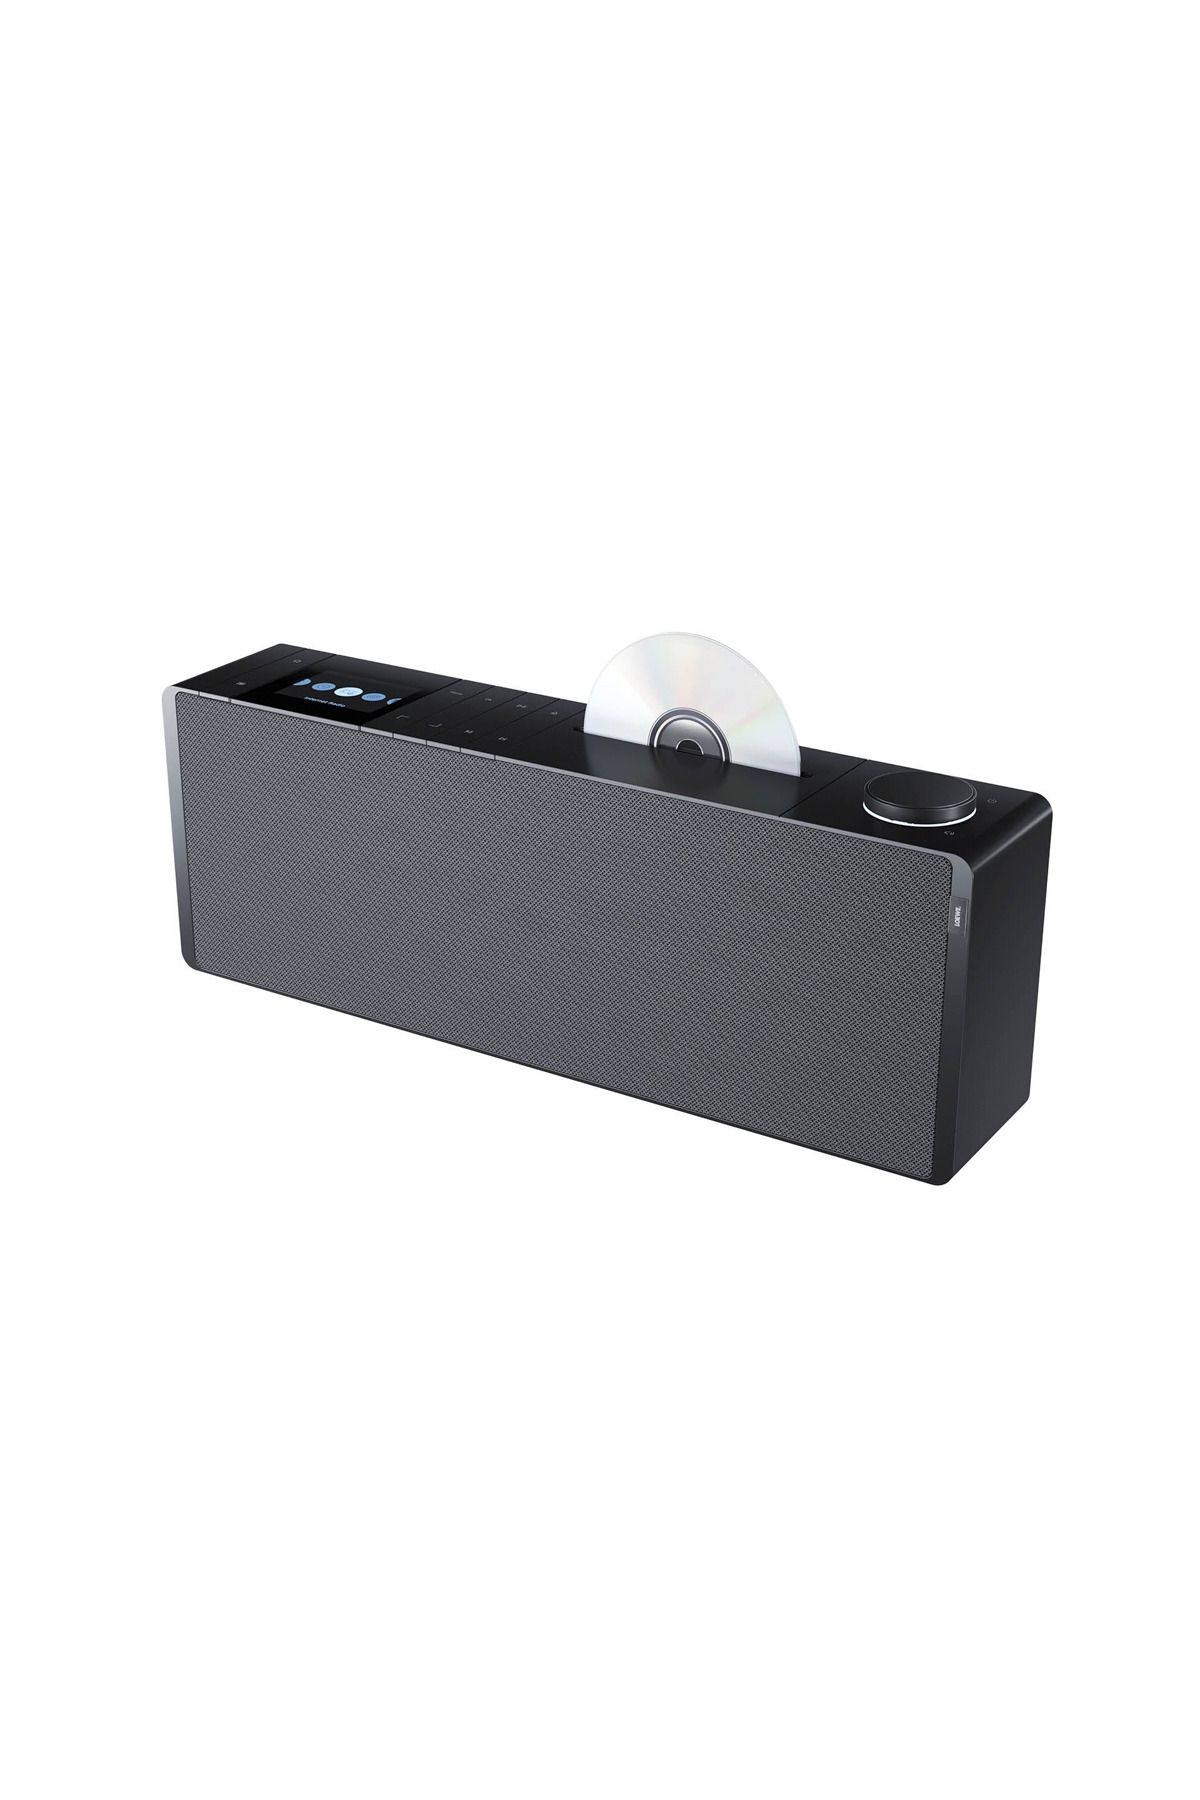 Loewe Klang S3 Bazalt Gri 46,0cmx16cmx9cm Taşınabilir Bluetooth Hoparlör İnternet Radyosu CD Çalar